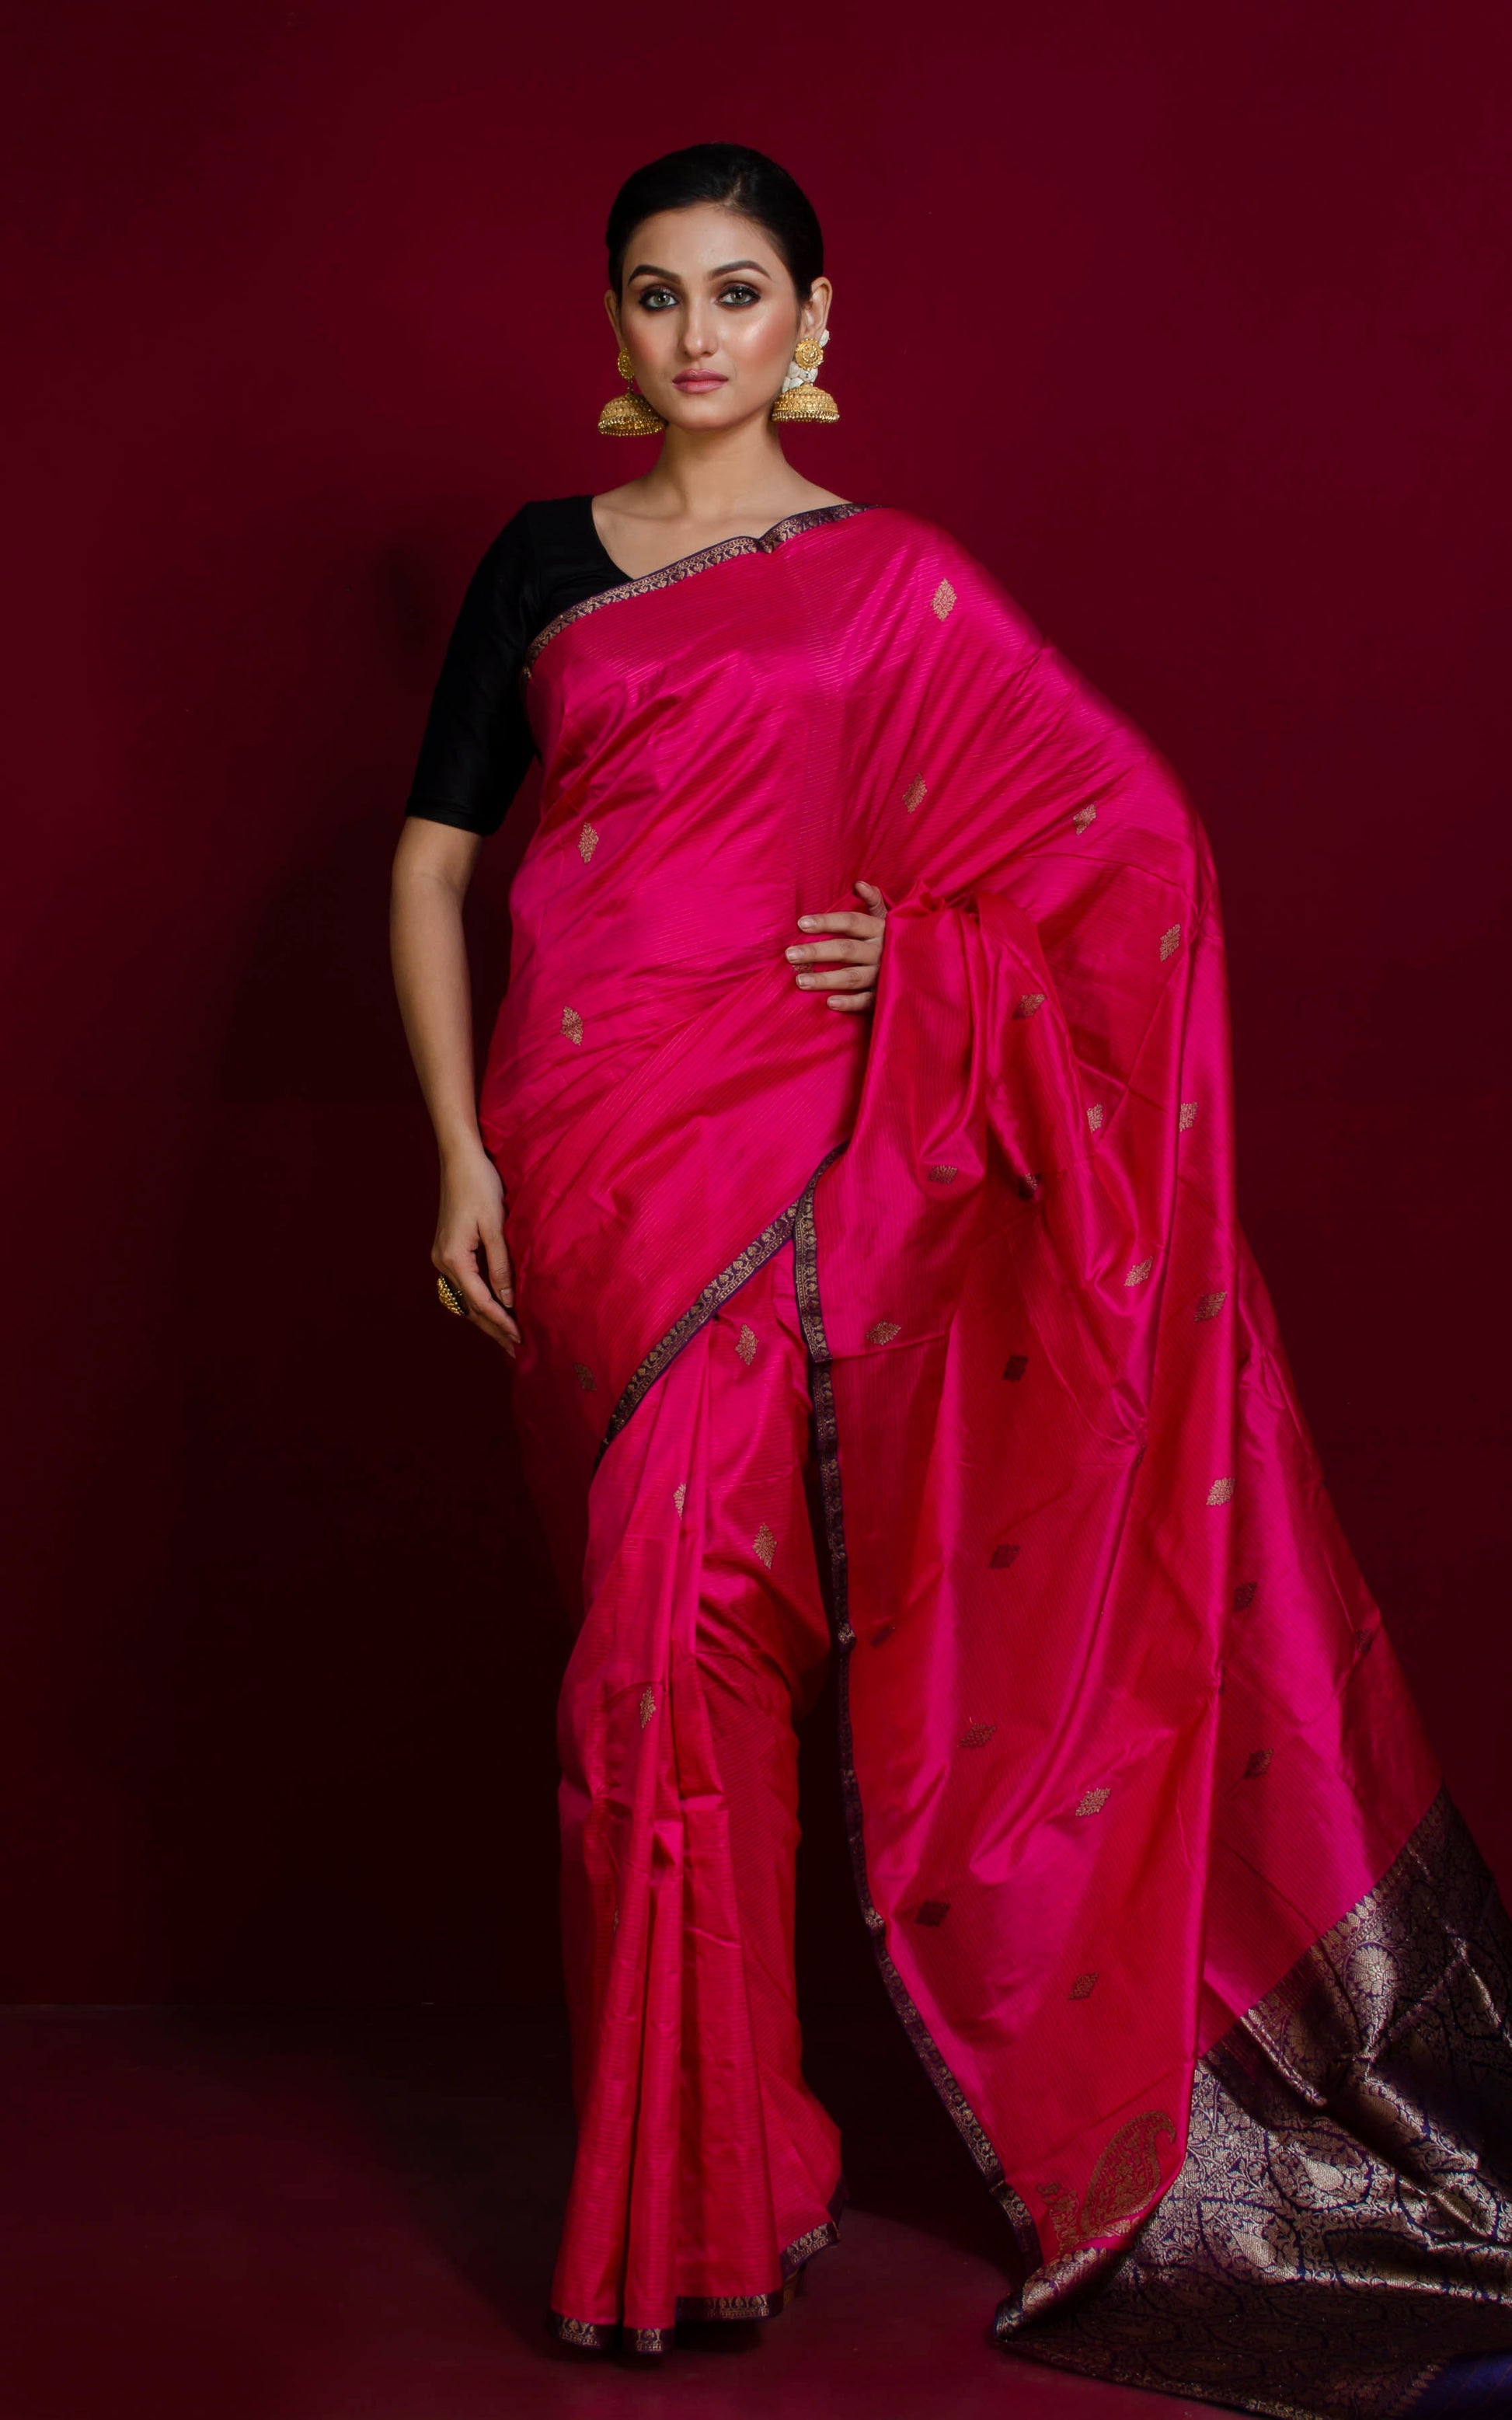 Woven Thread Nakshi Work Koniya Motif Pure Katan Banarasi Silk Saree in Deep Pink, Dark Blue and Antique Gold